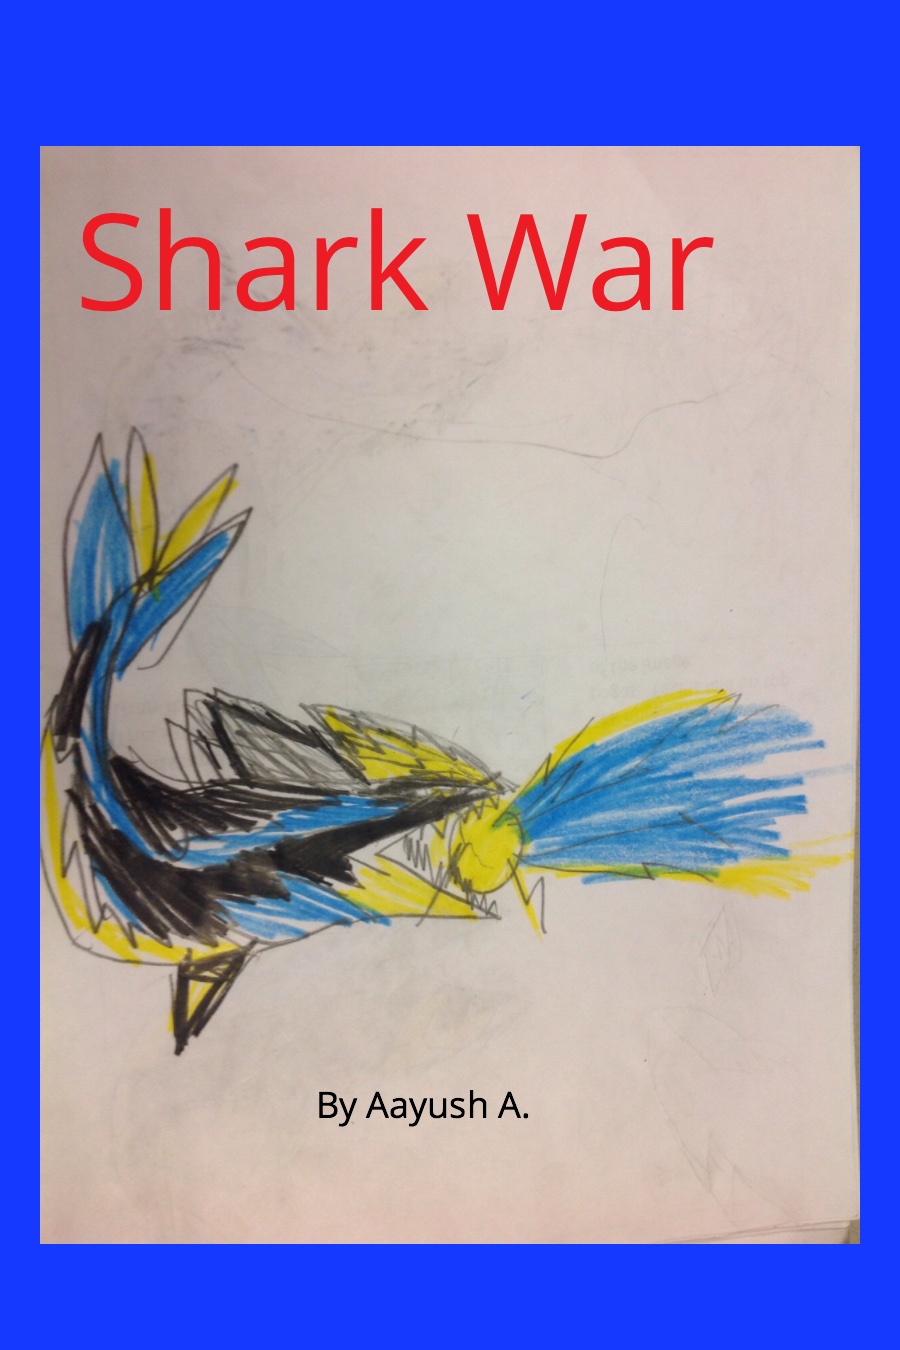 A Shark War by Aayush A